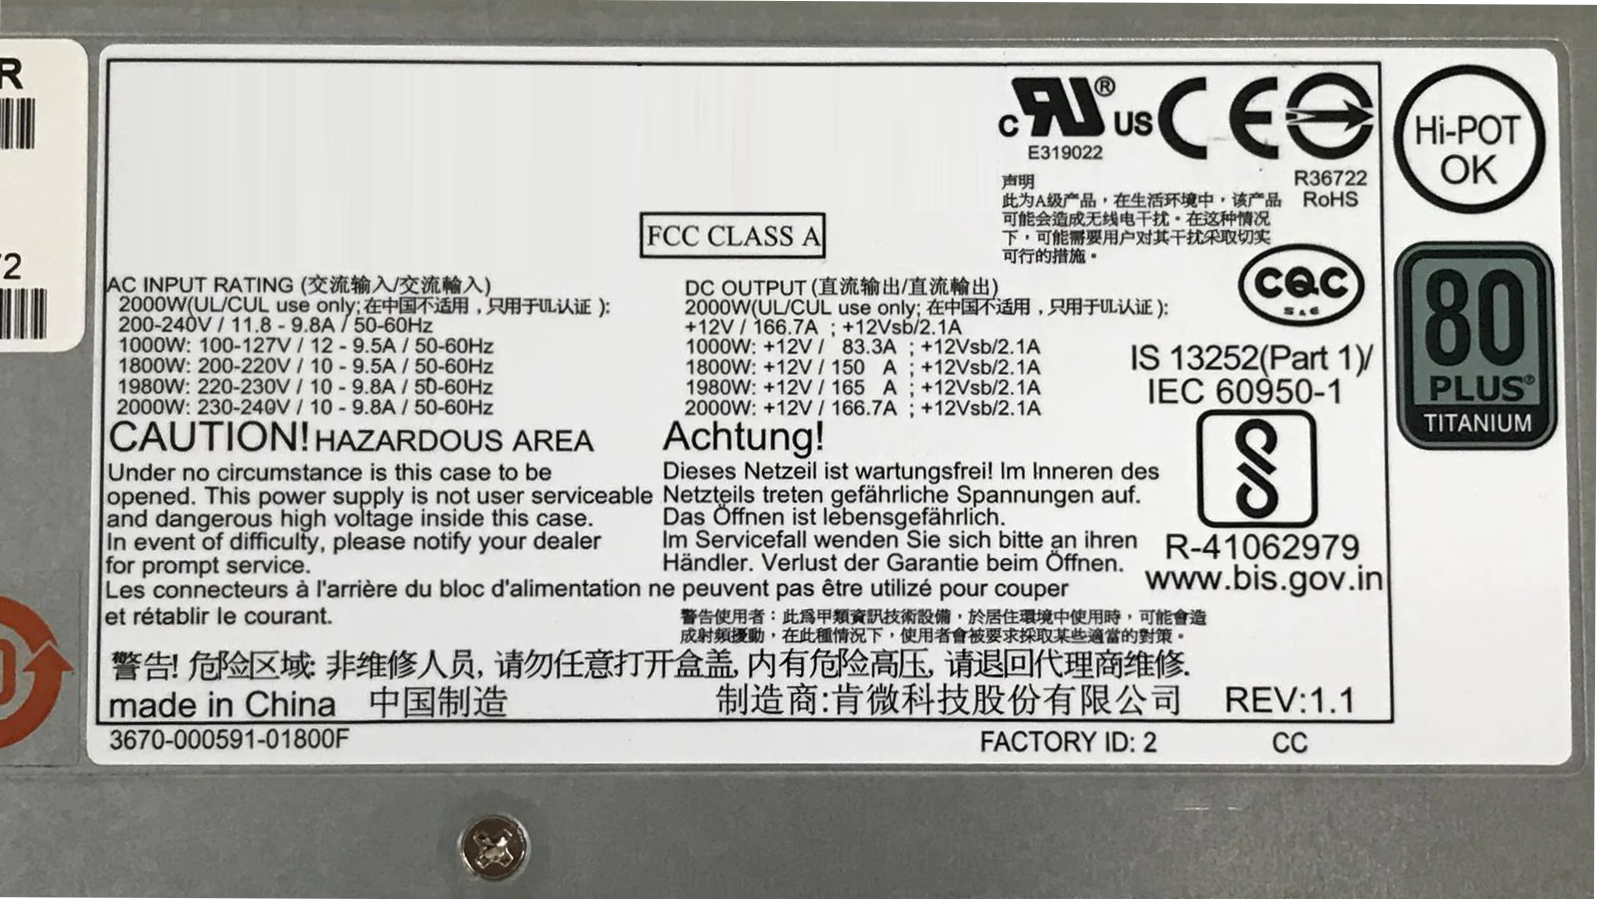 VAC label on server power supply